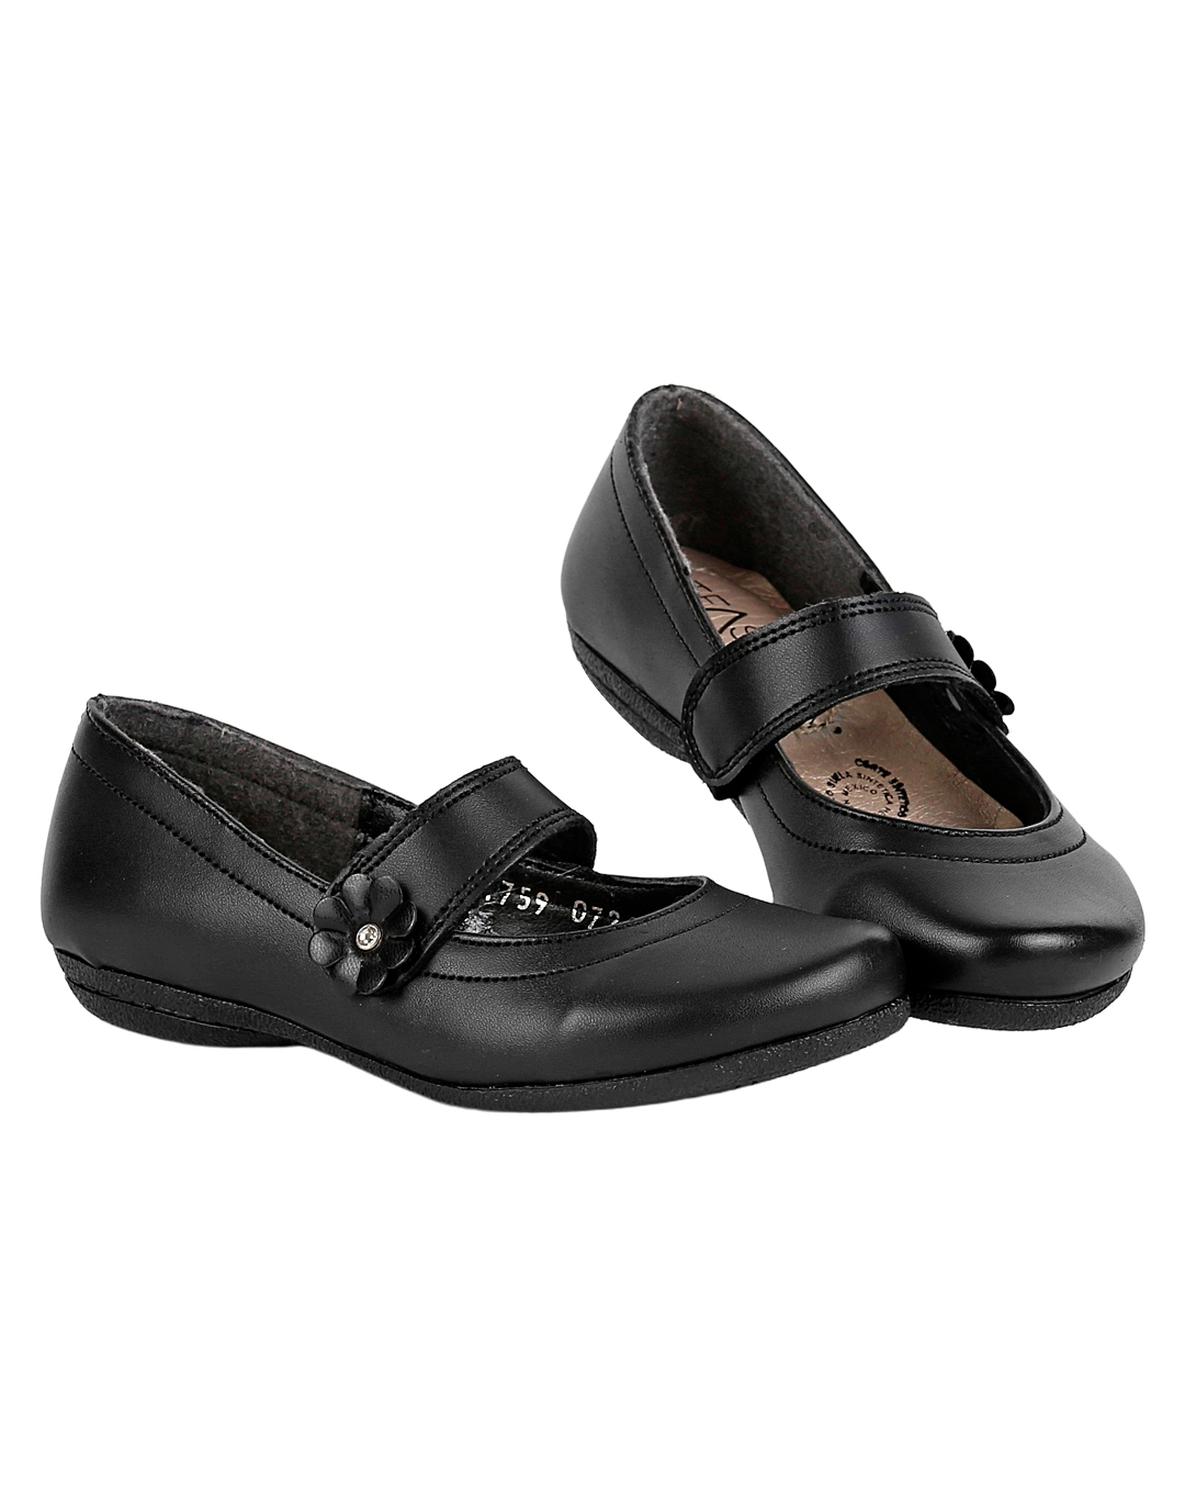 Zapato Escolar Piso Niña Negro Tacto Piel Stfashion 16803803